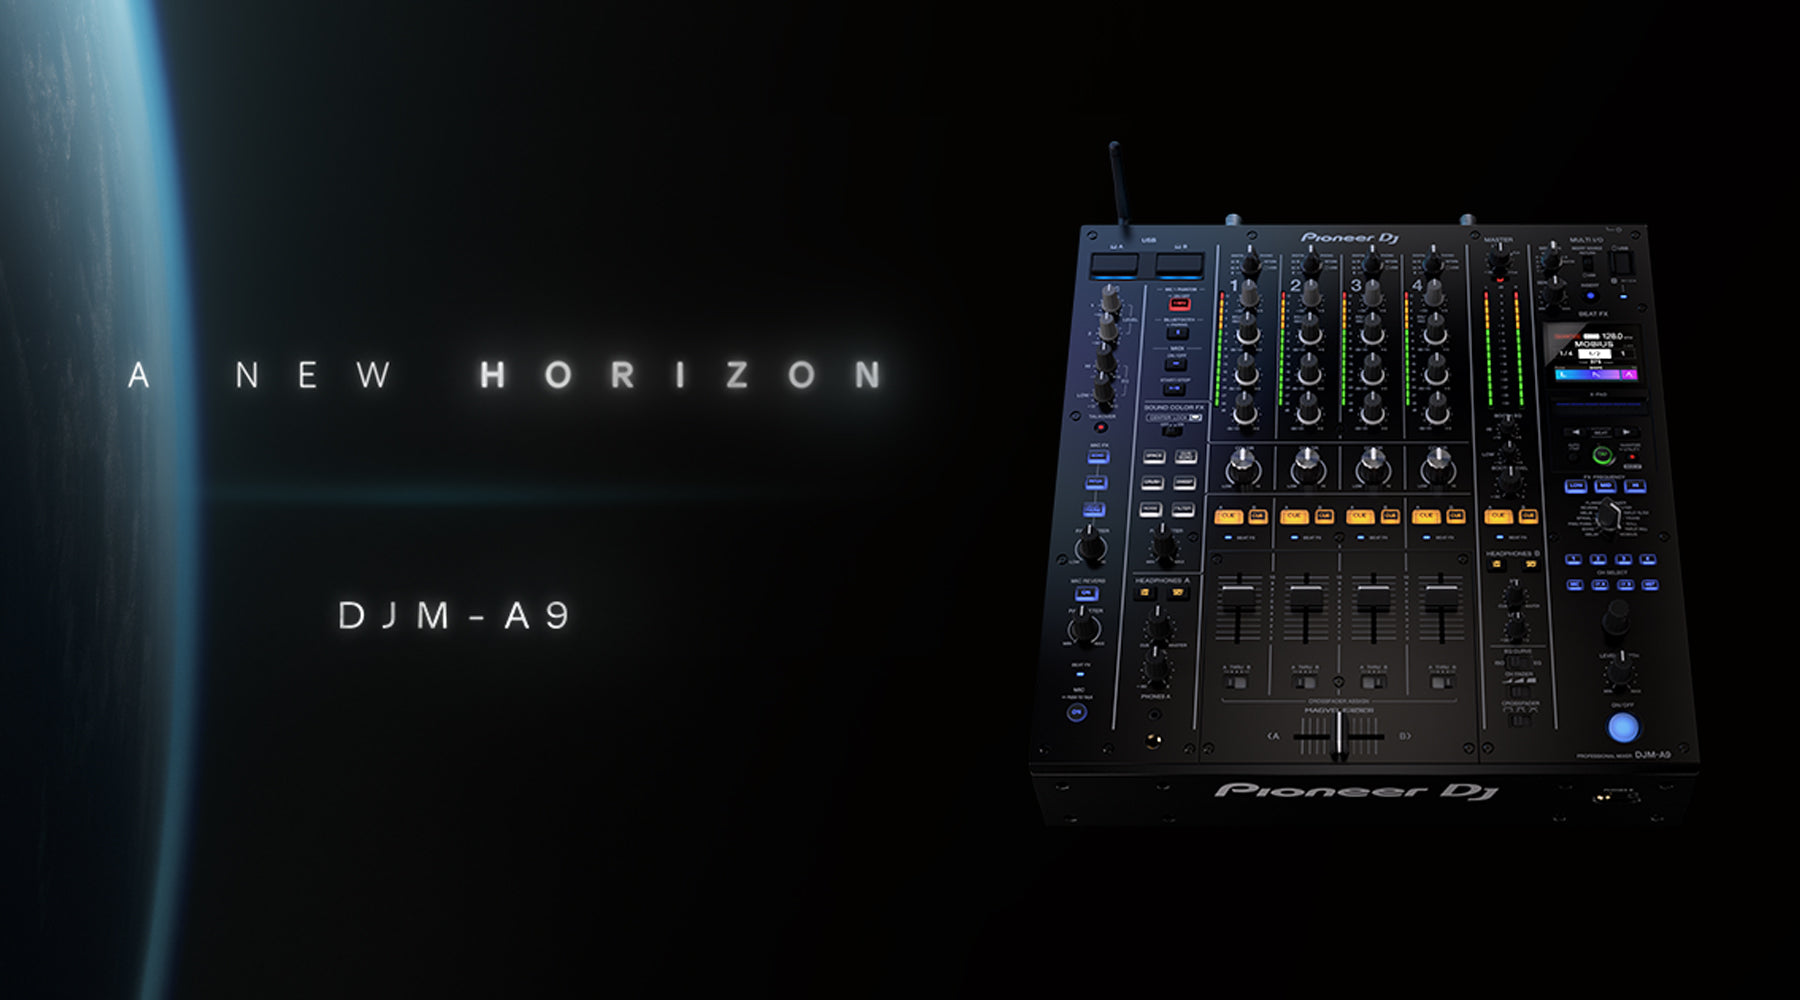 A New Horizon: Introducing the DJM-A9 next-generation professional DJ